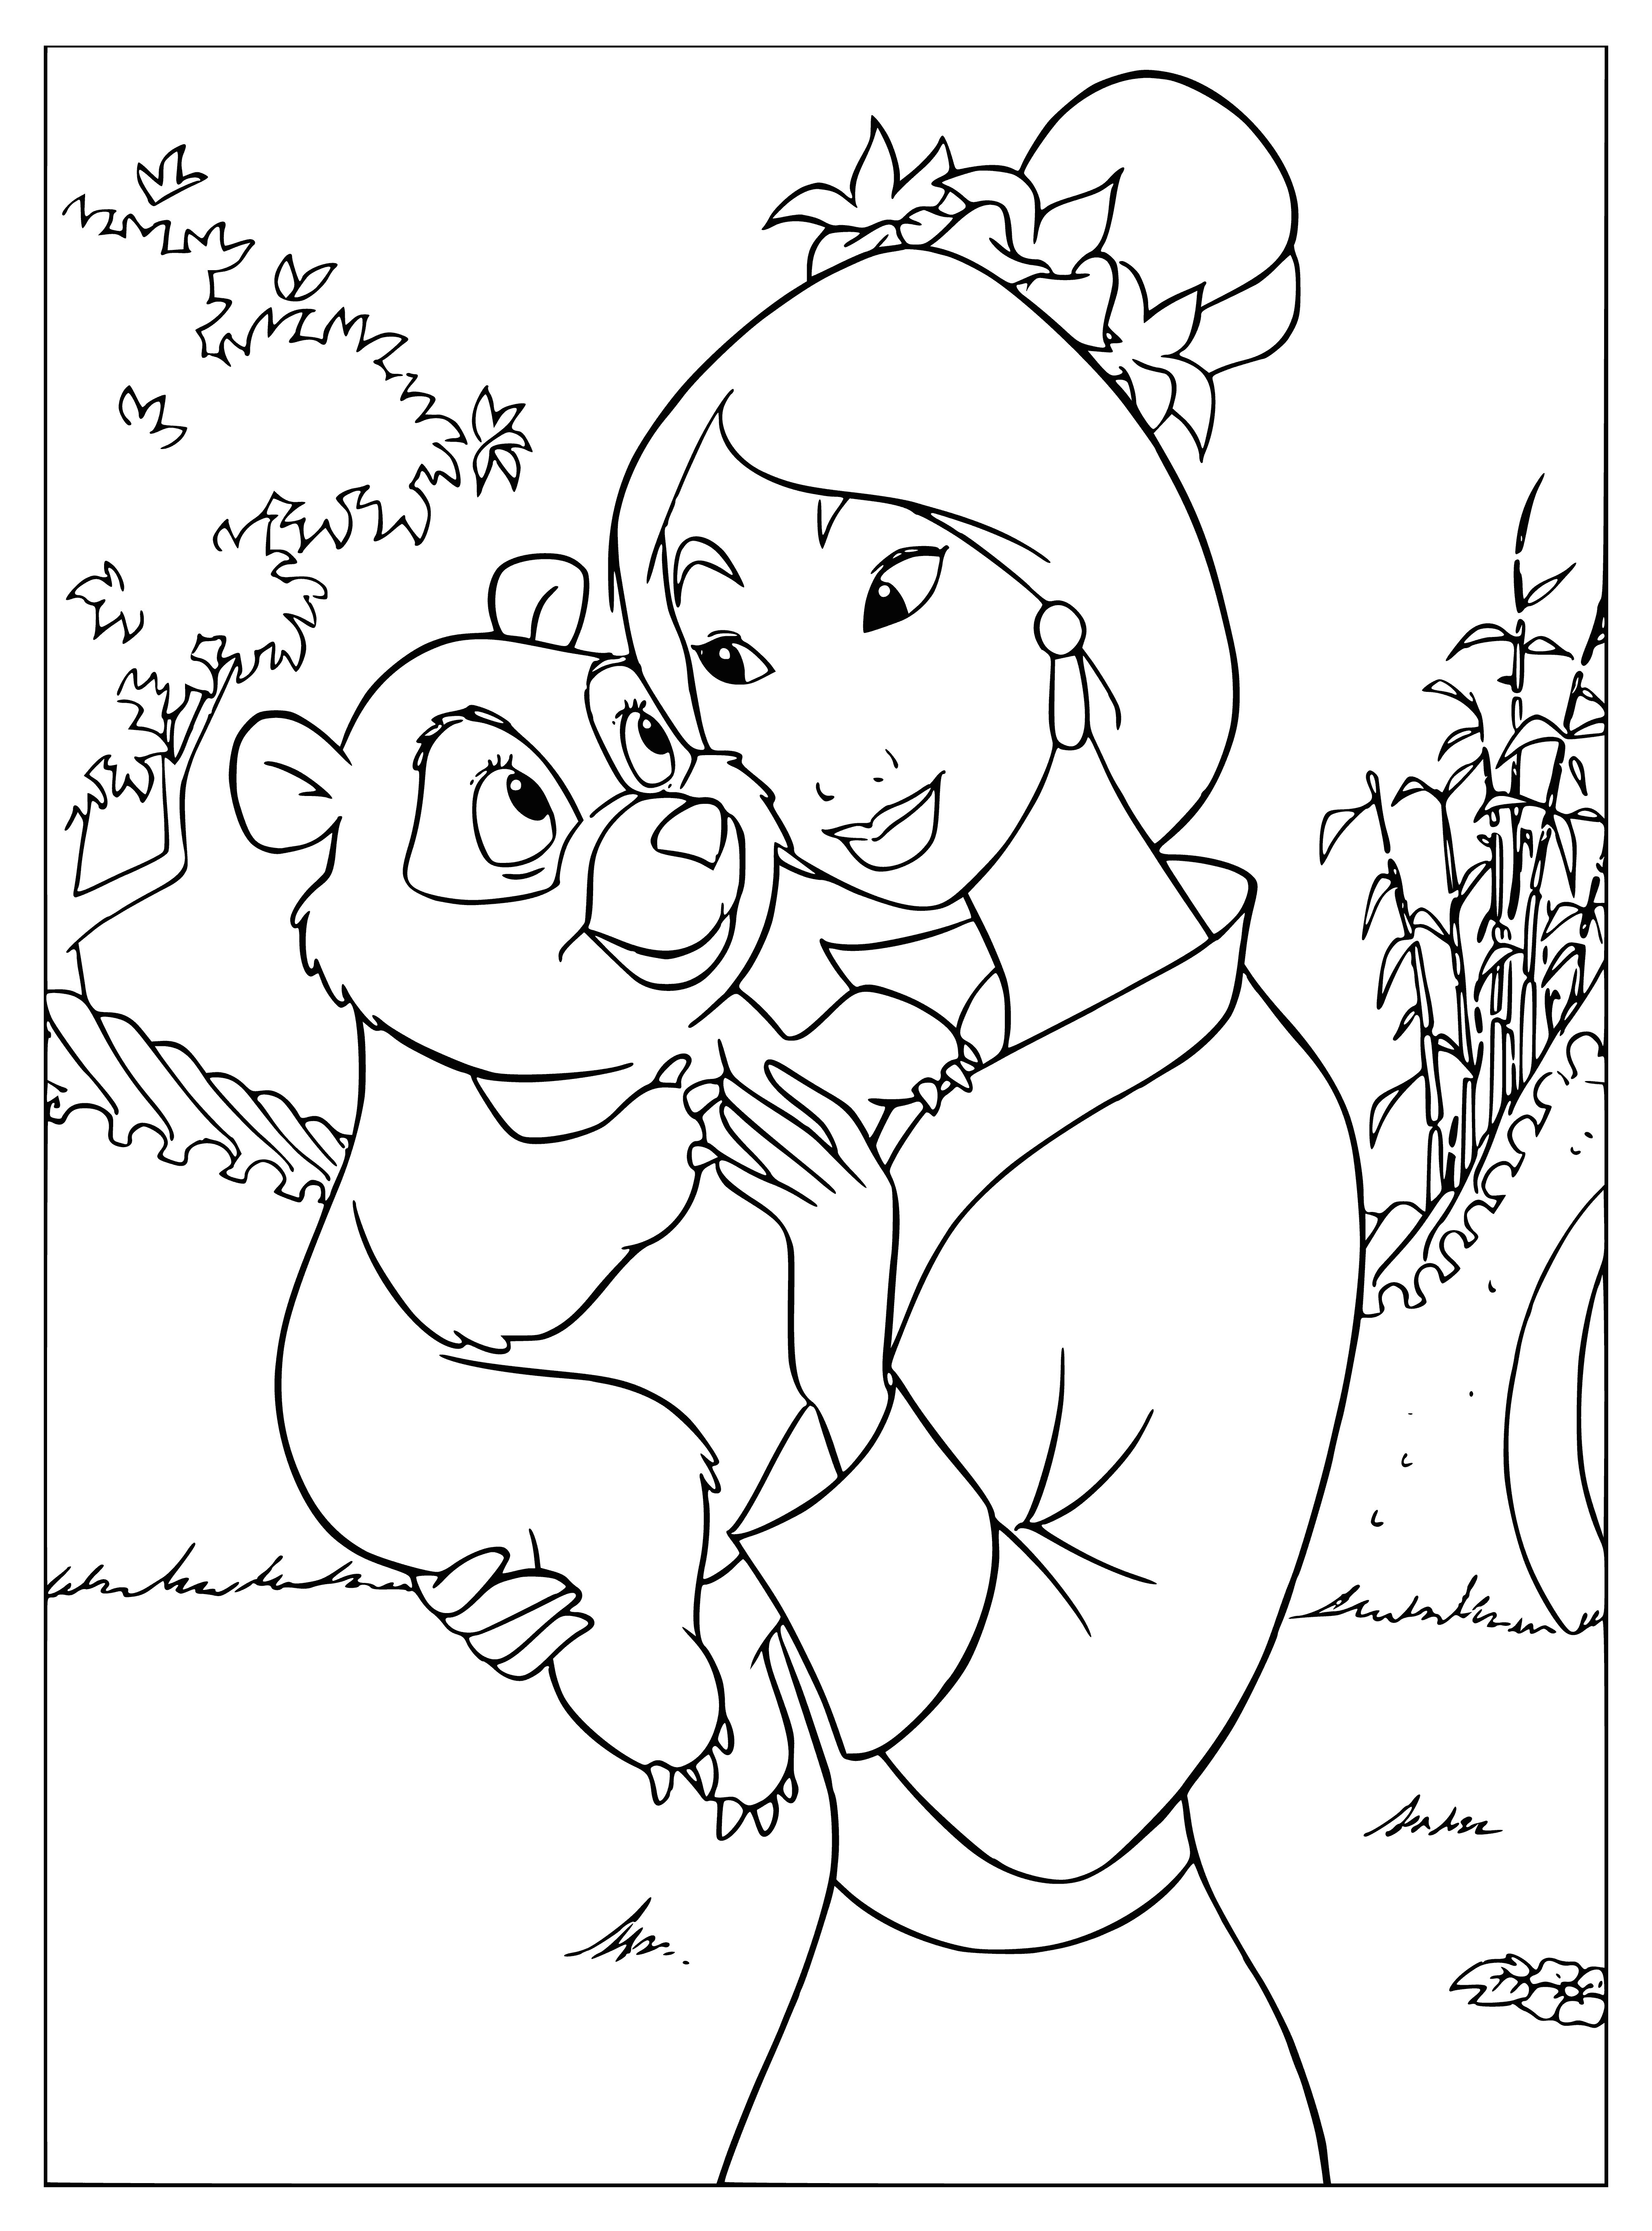 Malan with a panda coloring page